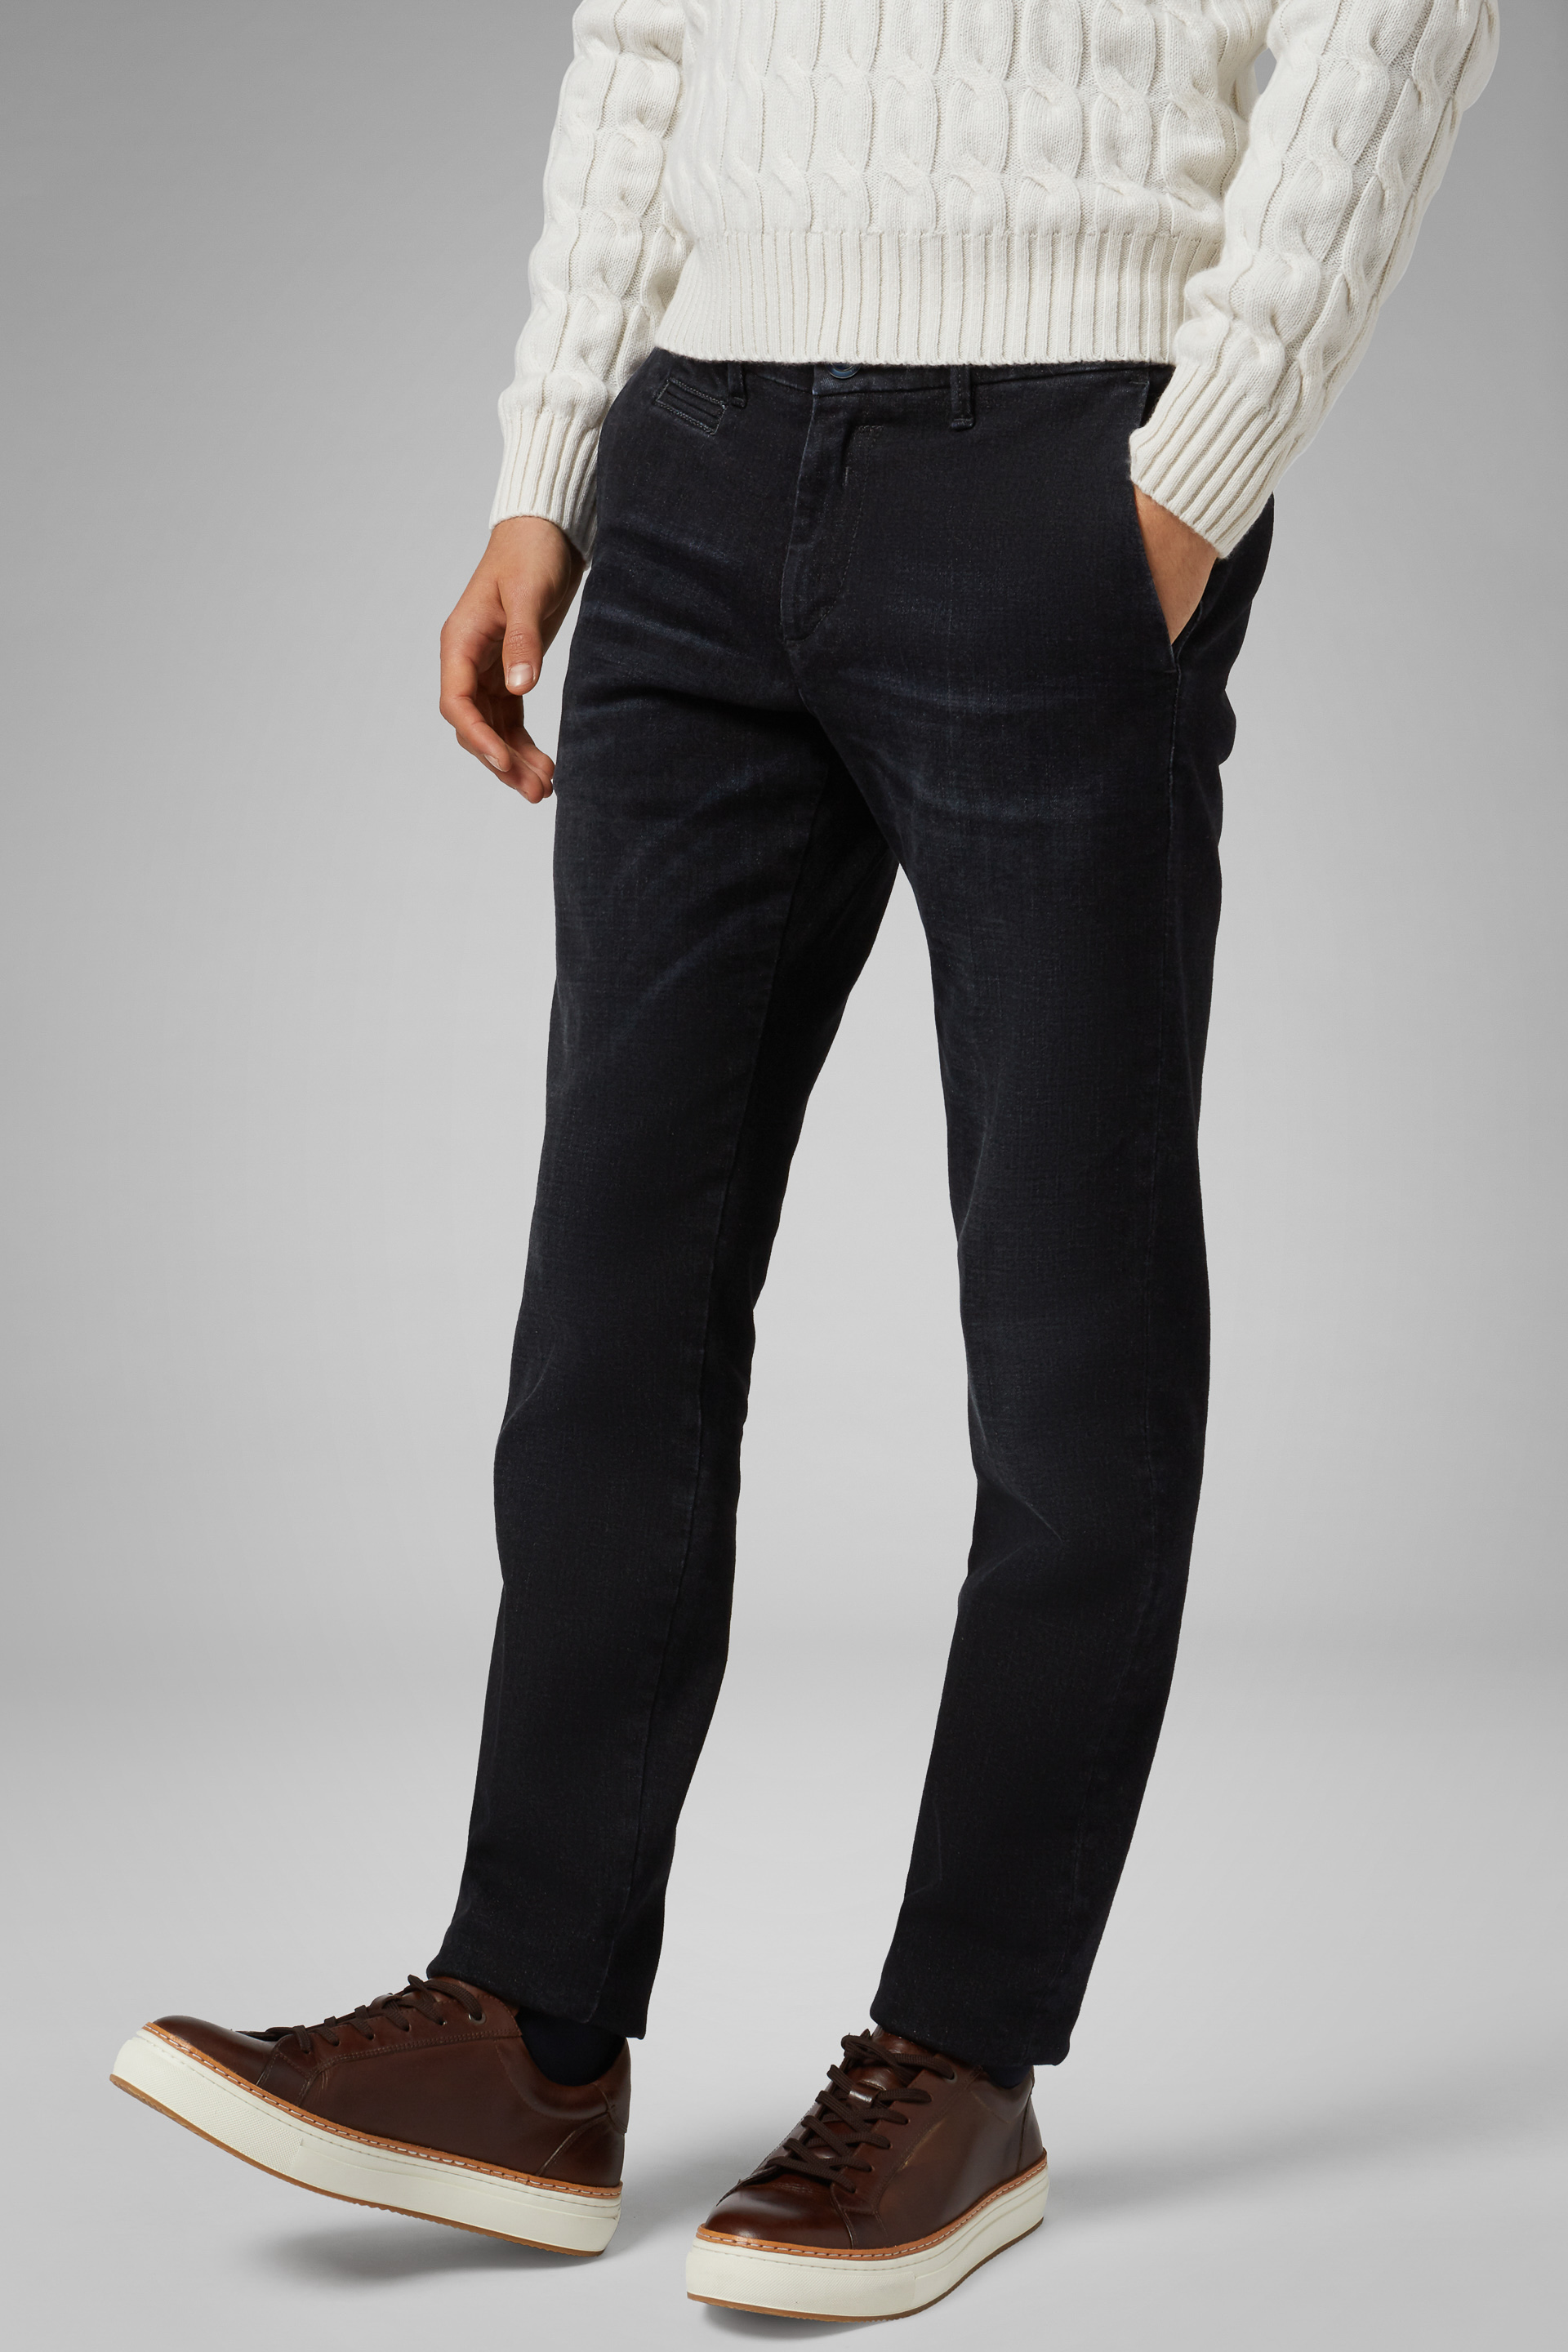 Men's Slim Fit Dark Wash Denim Jeans